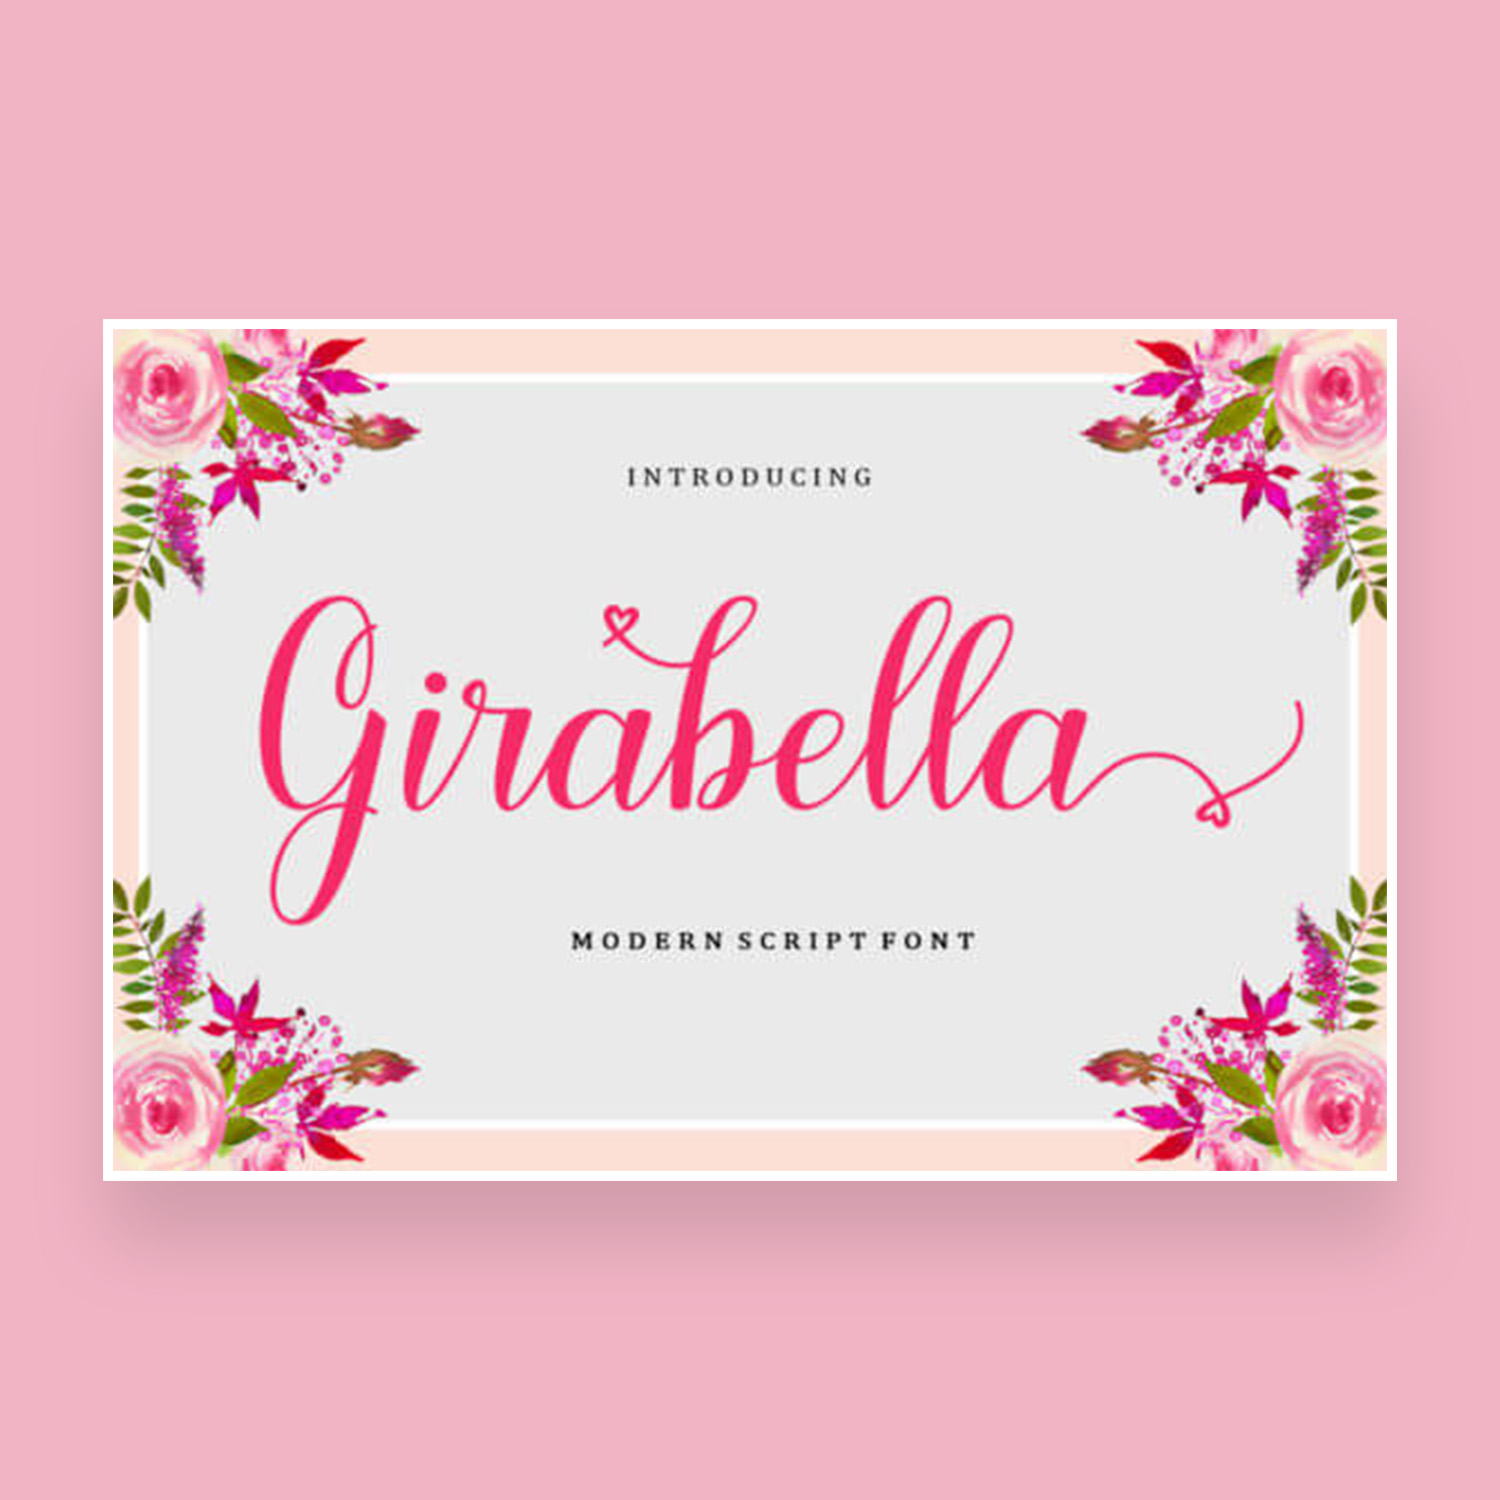 girabella beautiful and elegant handwritten font cover image.